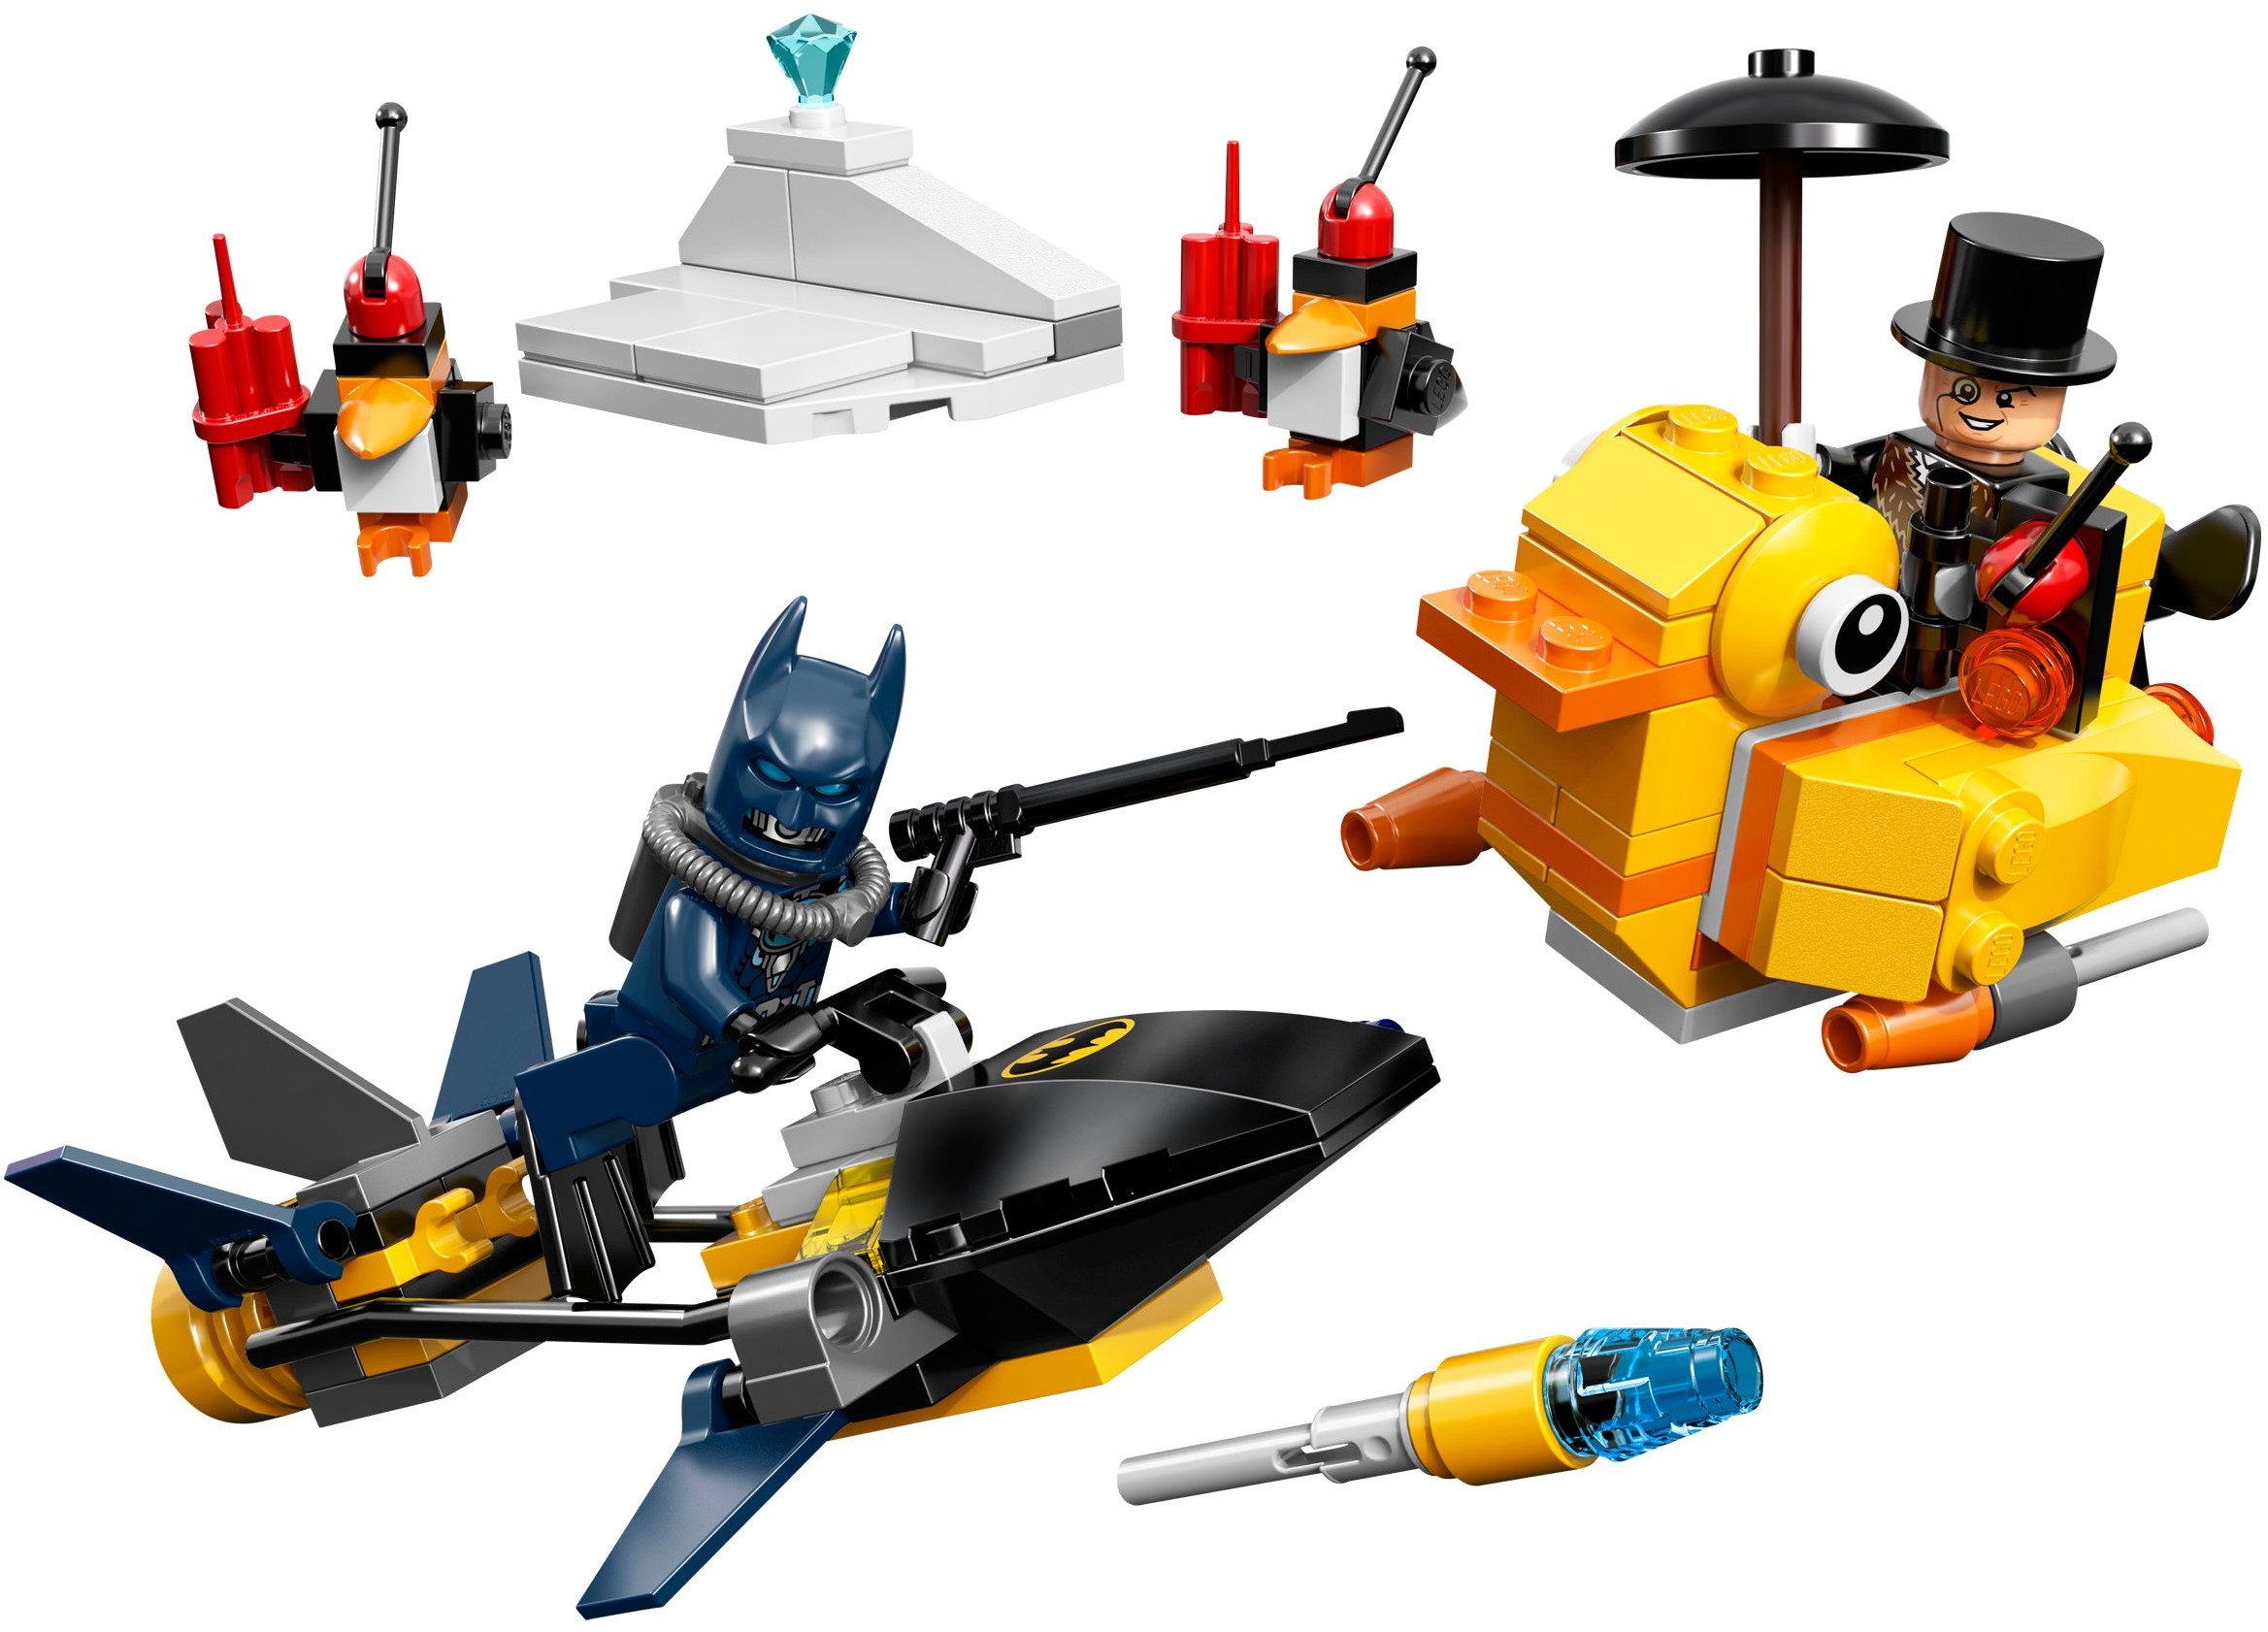 Every LEGO Batman set retiring in 2022 and 2023 – September